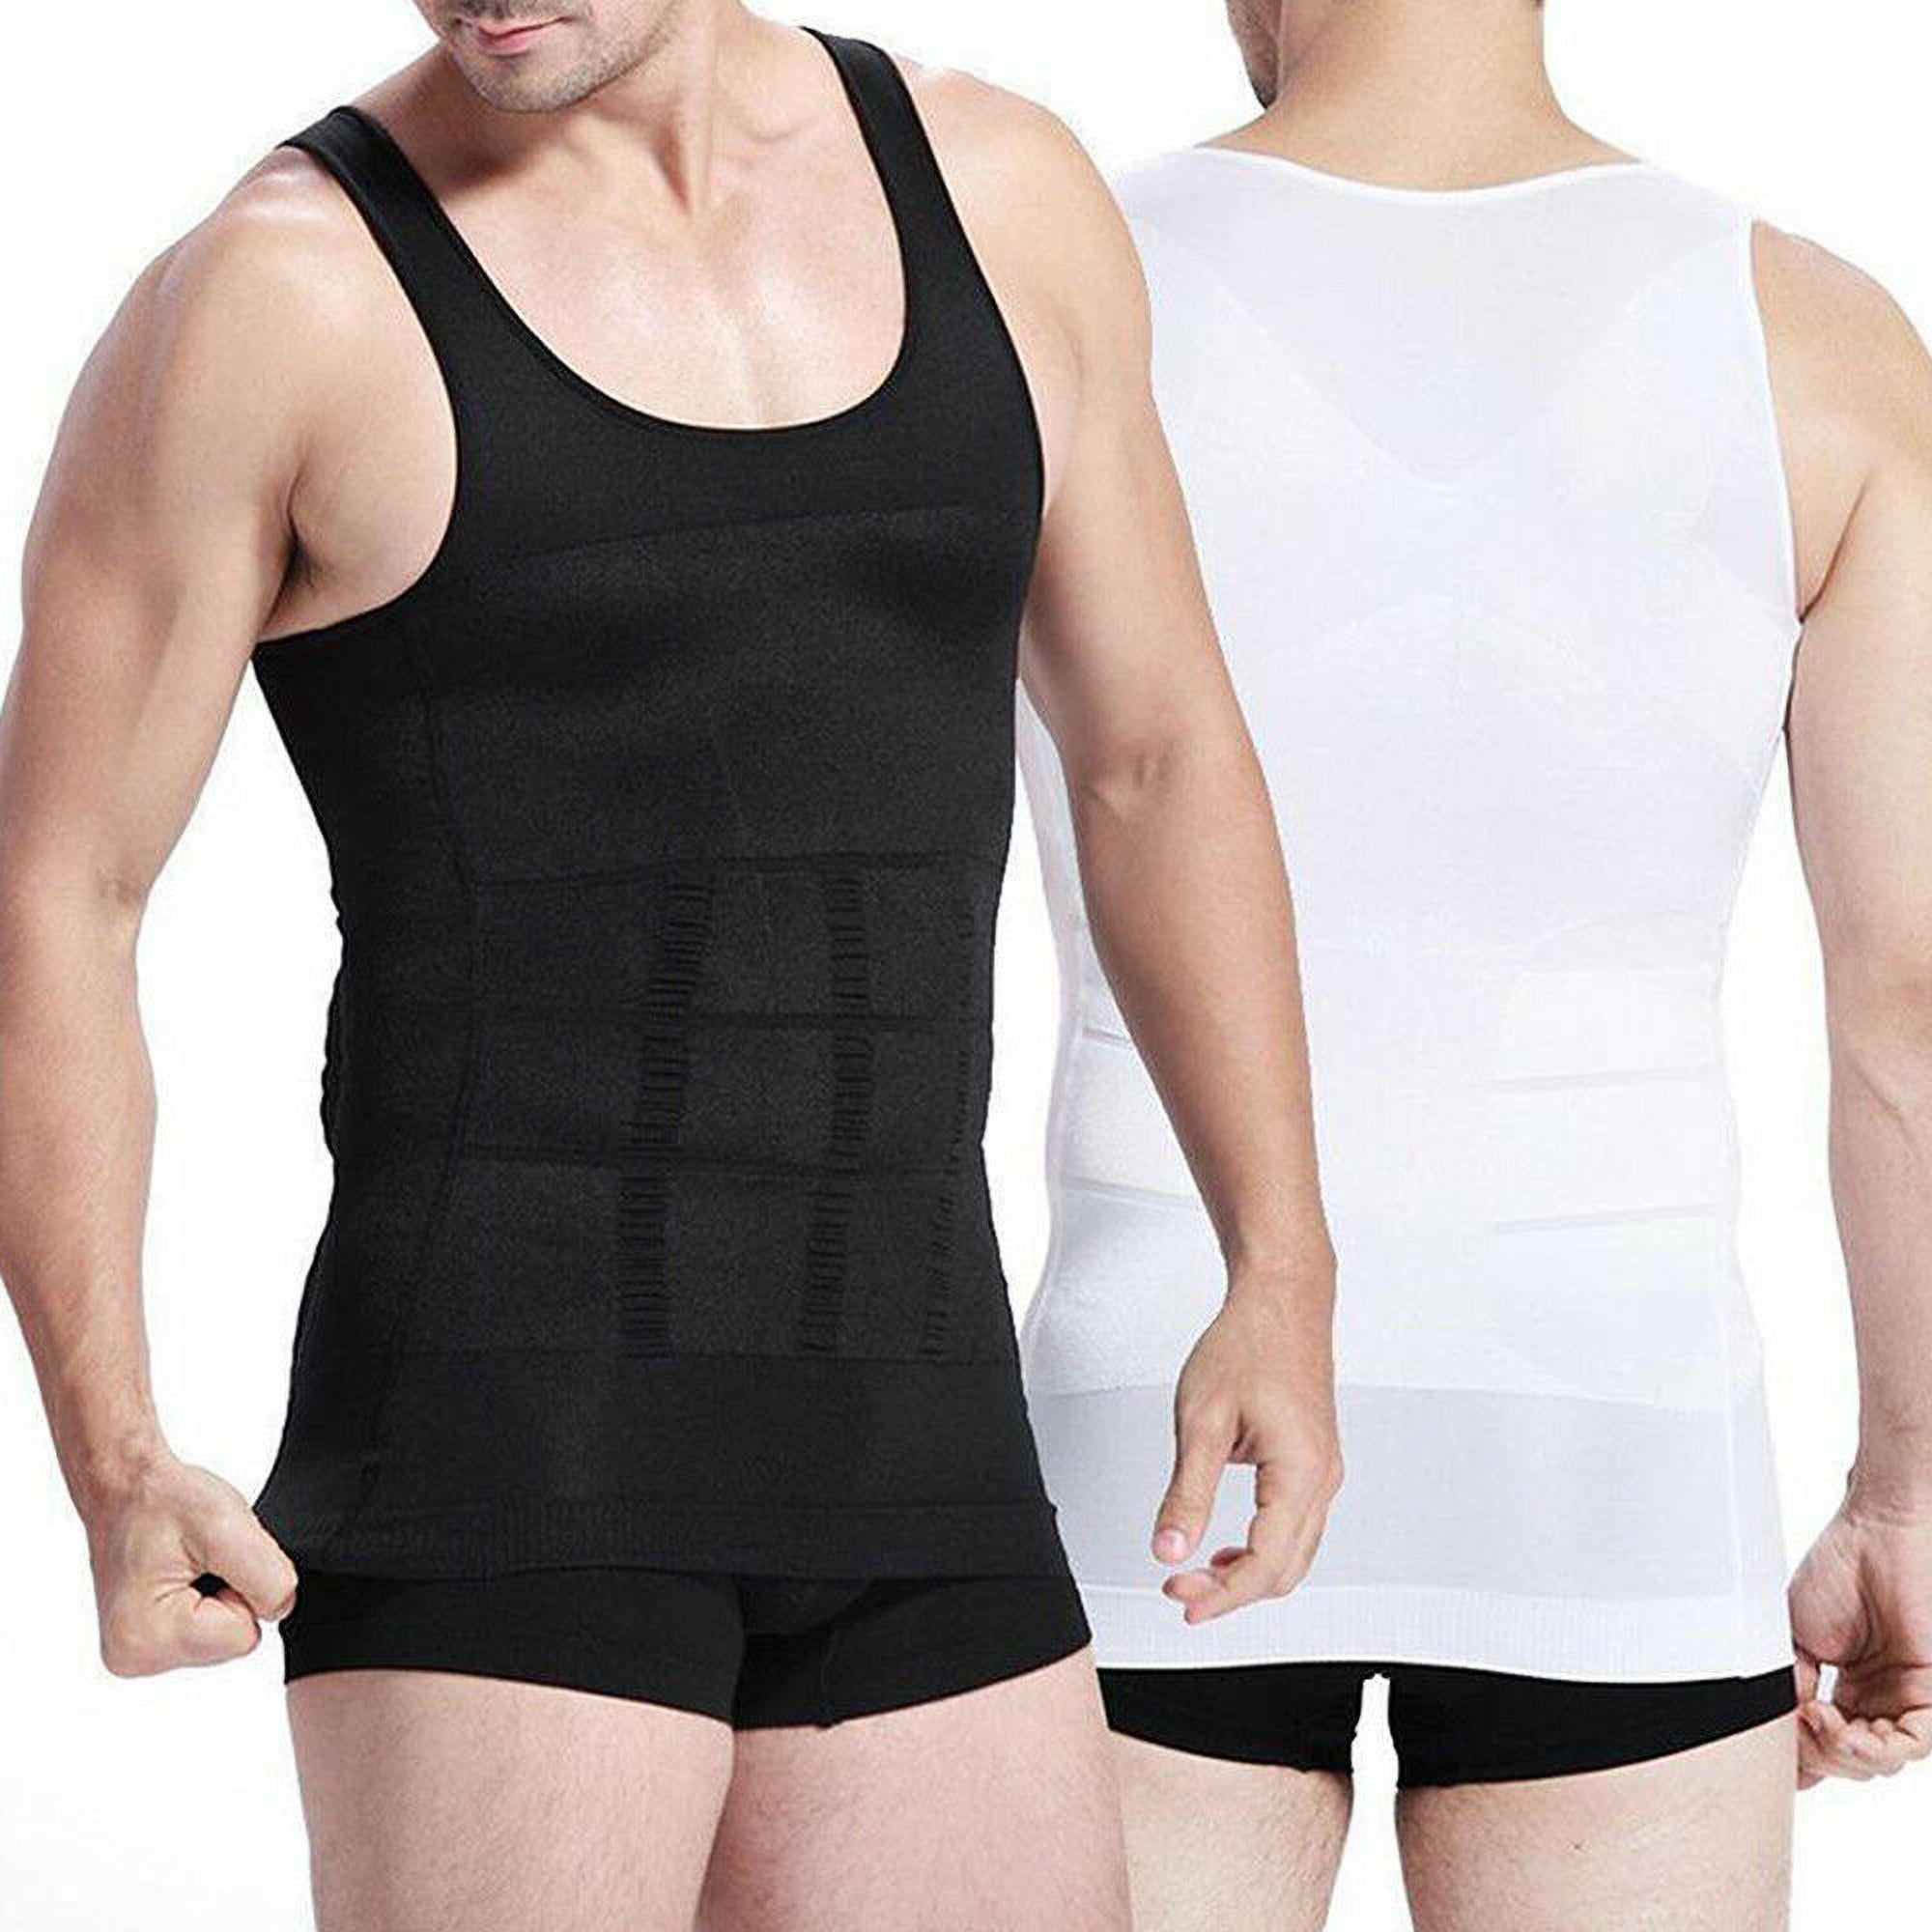 UK Flat Chest Abdominal Tummy Shaper Gym Training Vest Shirt for Men New GS 